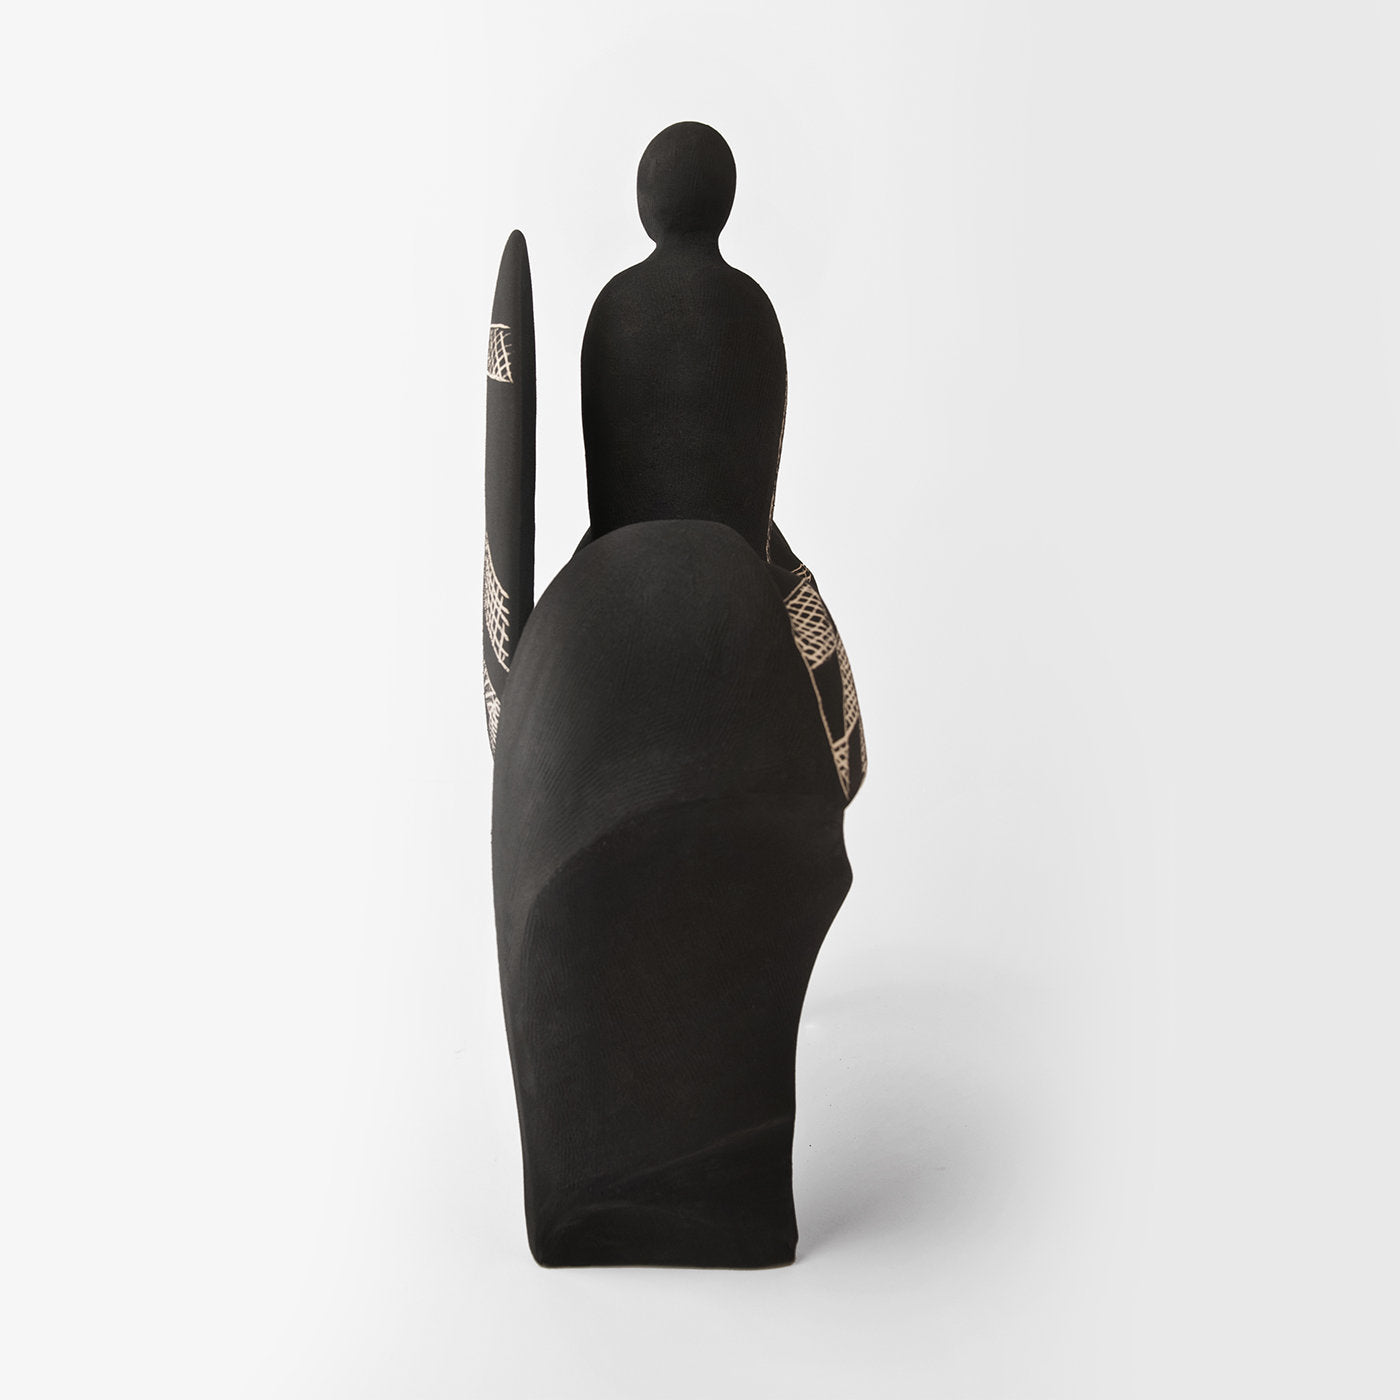 Guerriero Black Sculpture - Alternative view 1